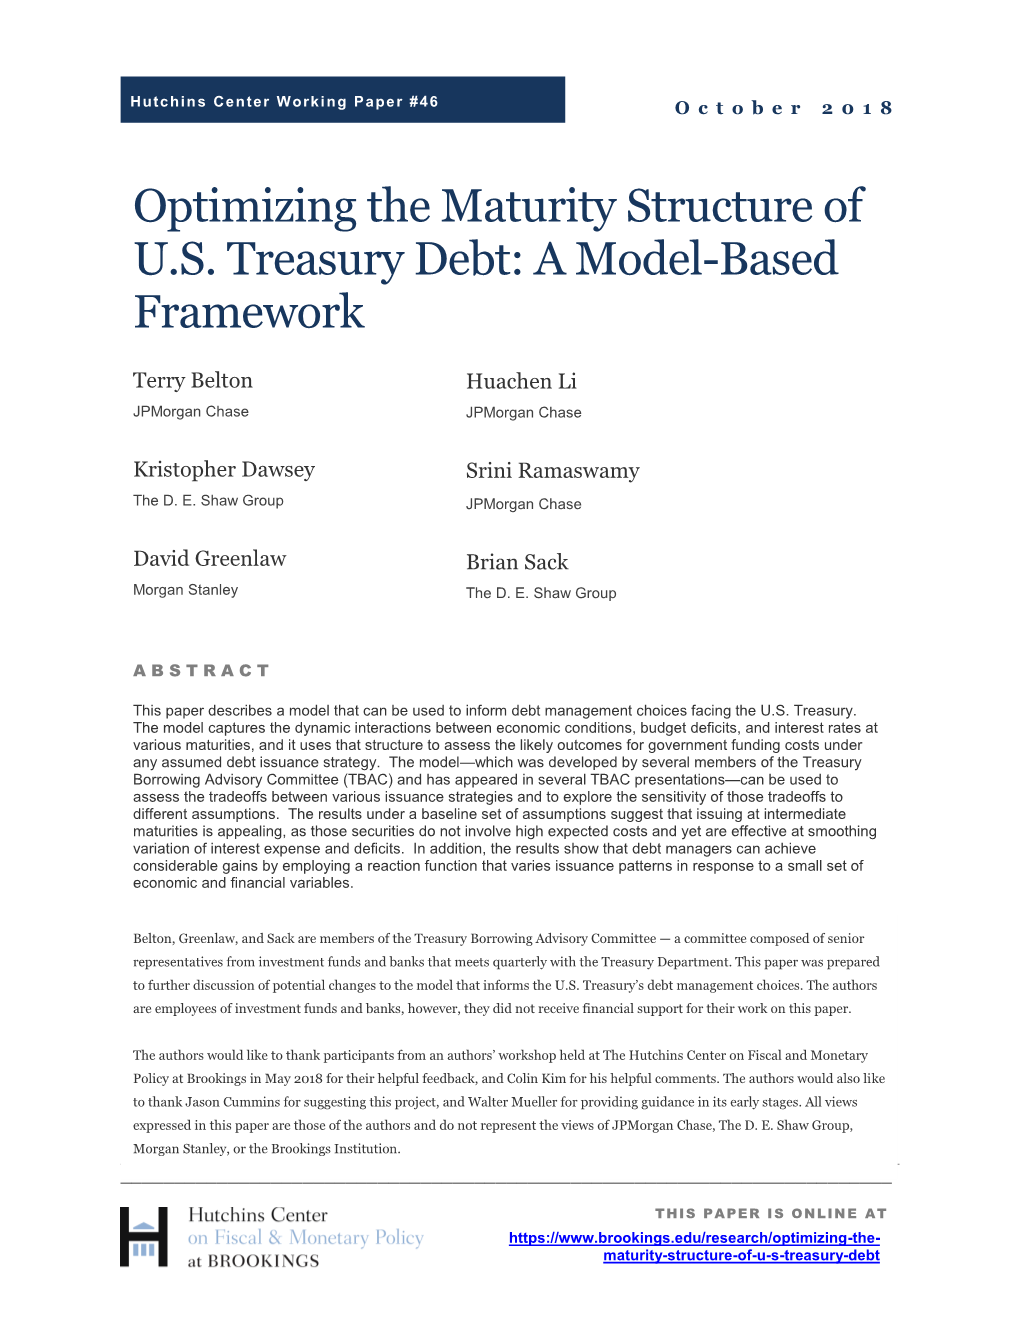 Optimizing the Maturity Structure of US Treasury Debt